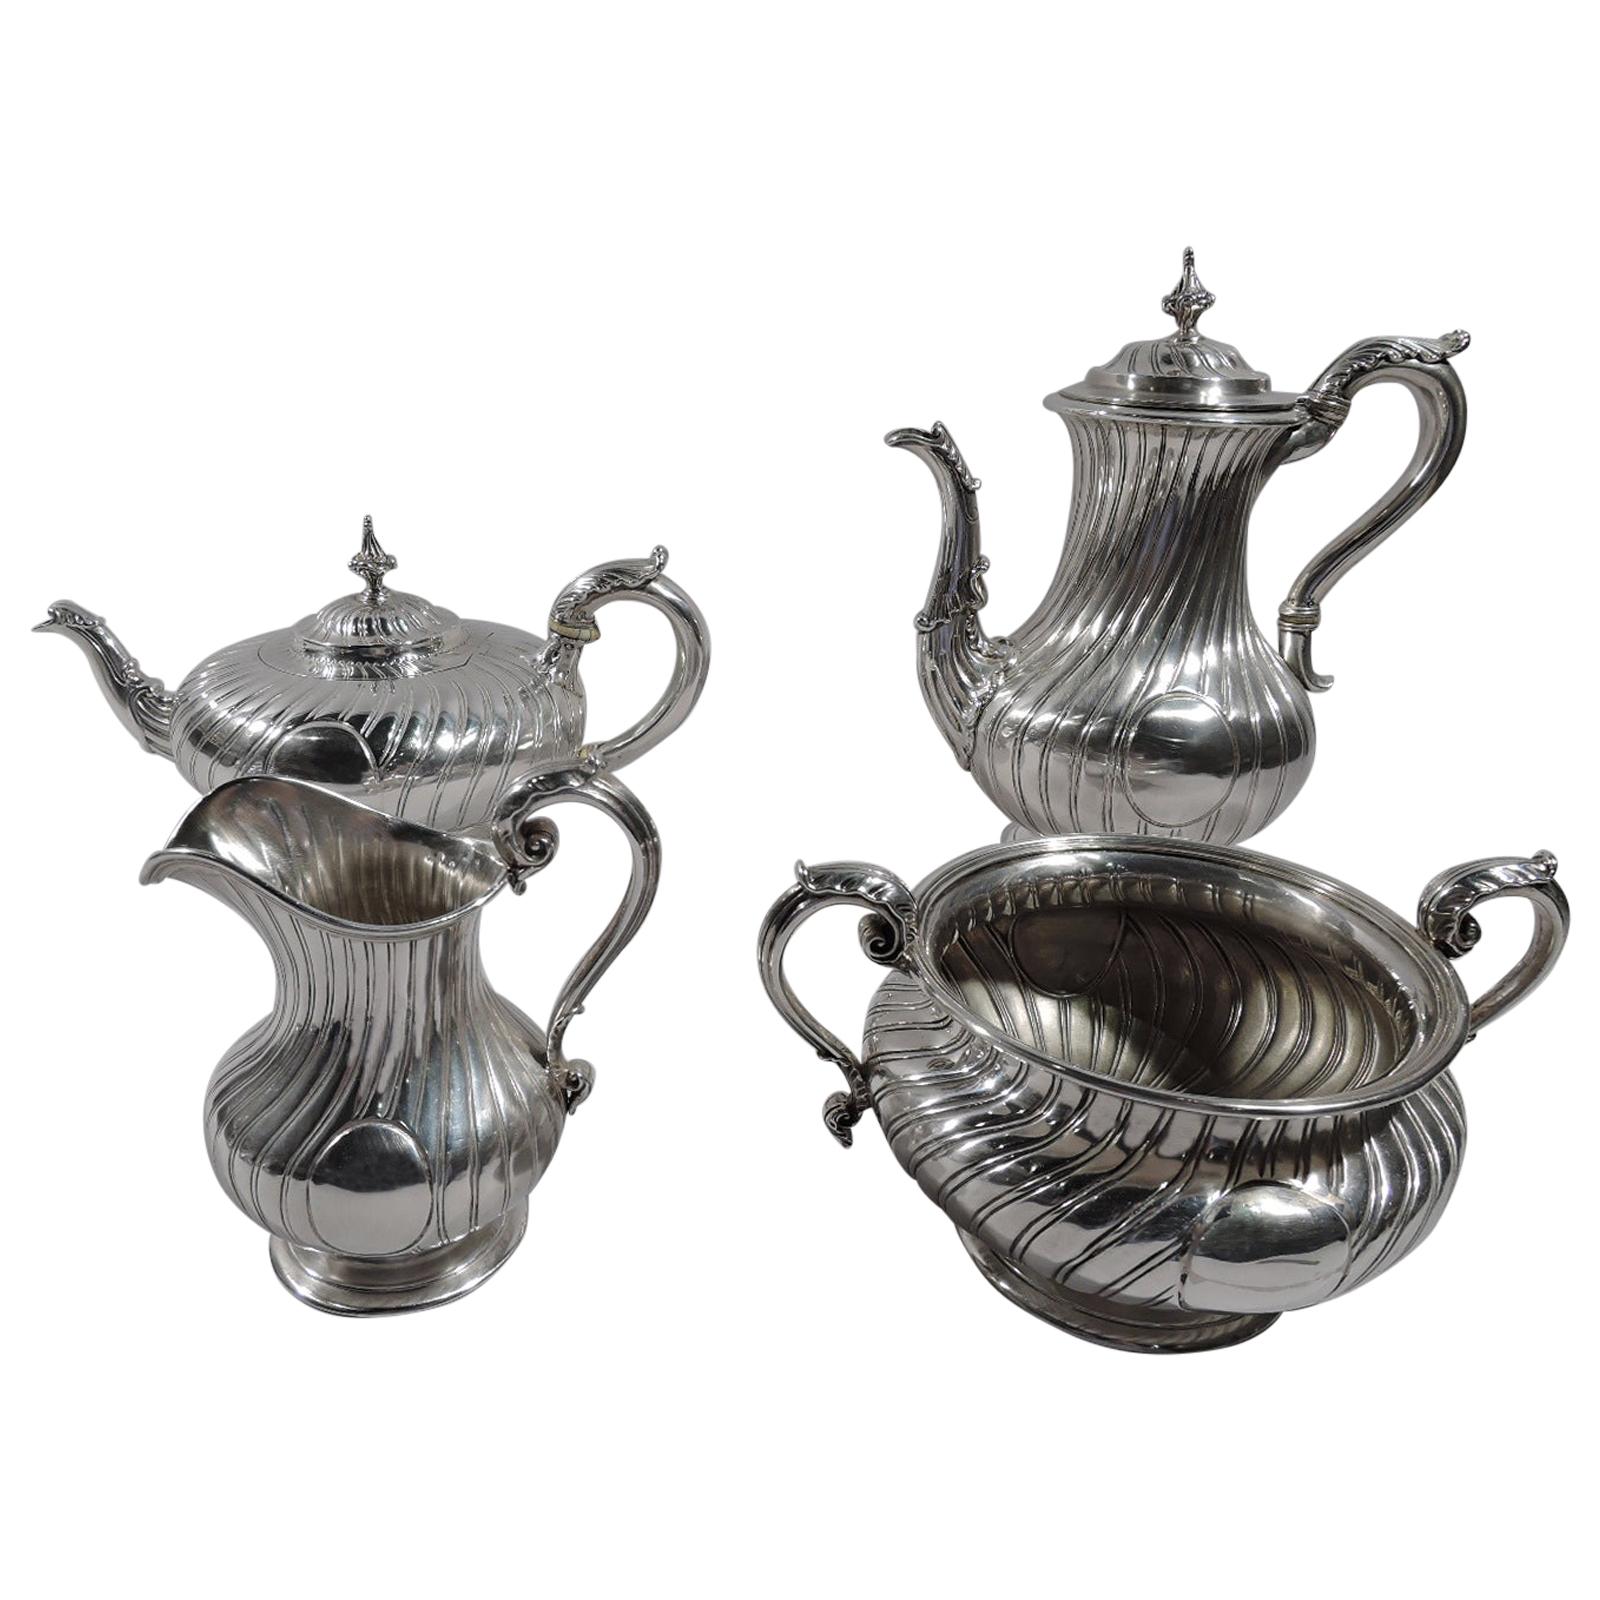 Paul Storr English Regency Sterling Silver Coffee and Tea Set